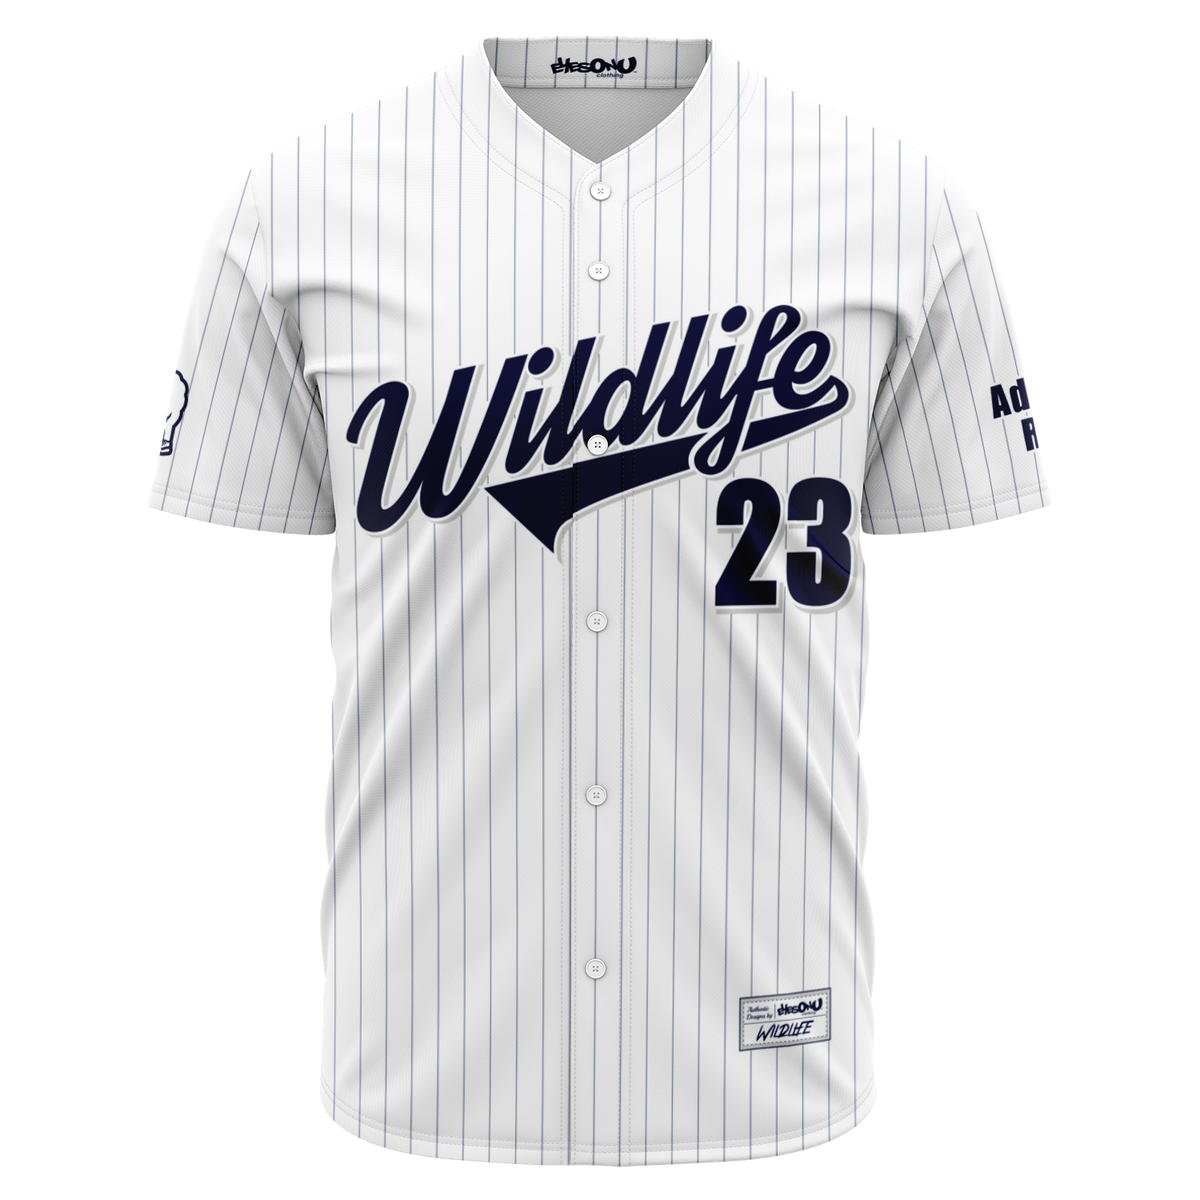 WildLife Pinstripe Baseball Jersey (white) – Eyes On You Clothing